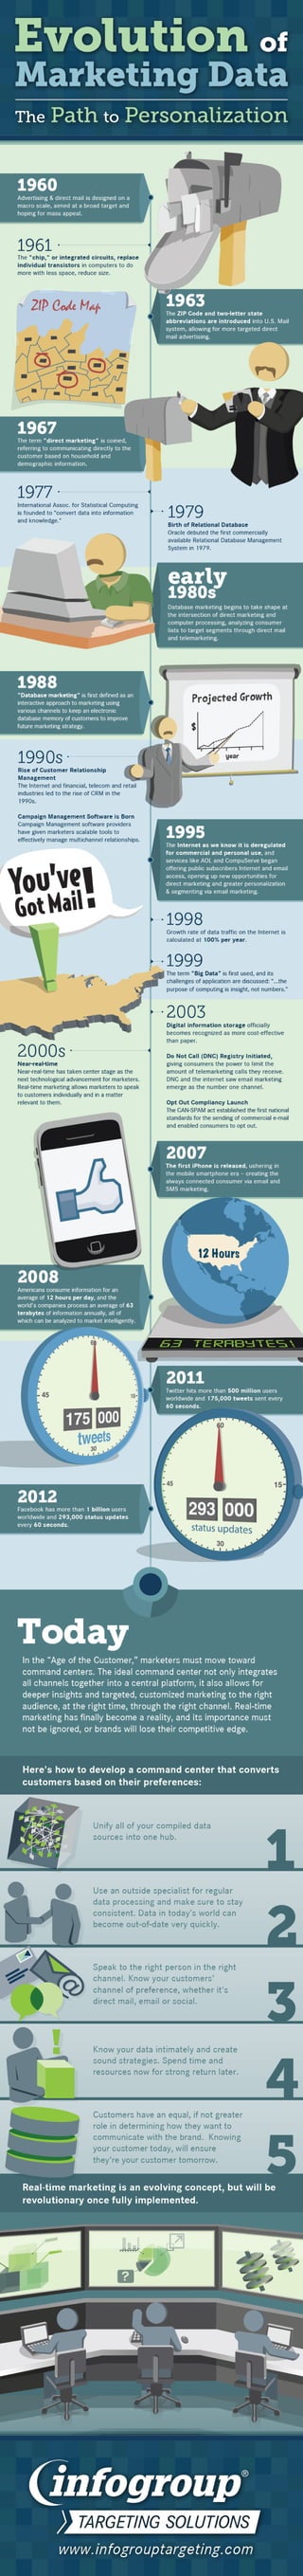 Evolution of marketing data infographic